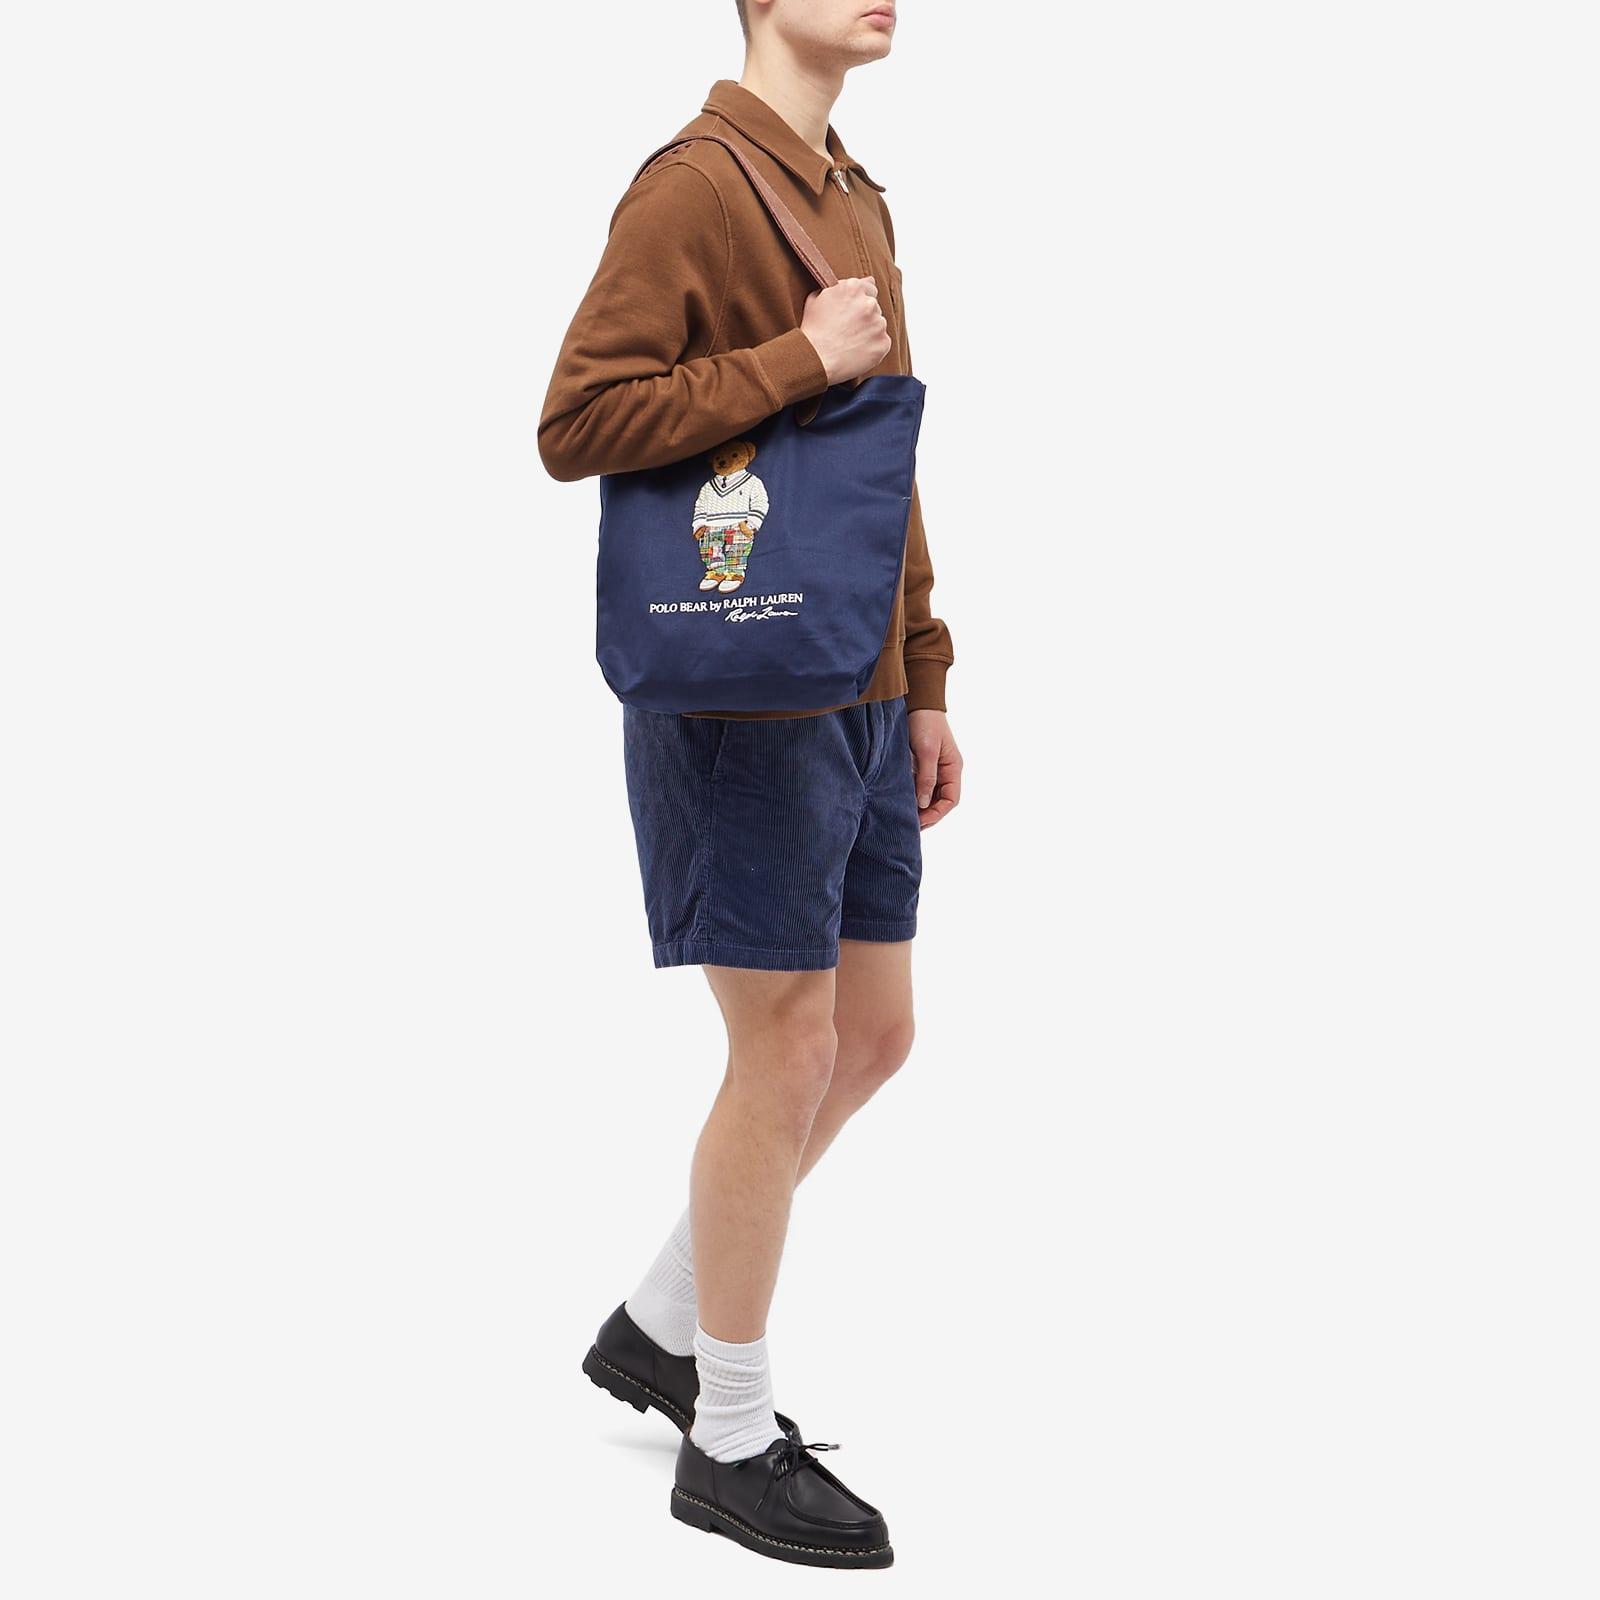 Polo Ralph Lauren Polo Bear Twill Shopper Tote Handbags in Blue for Men